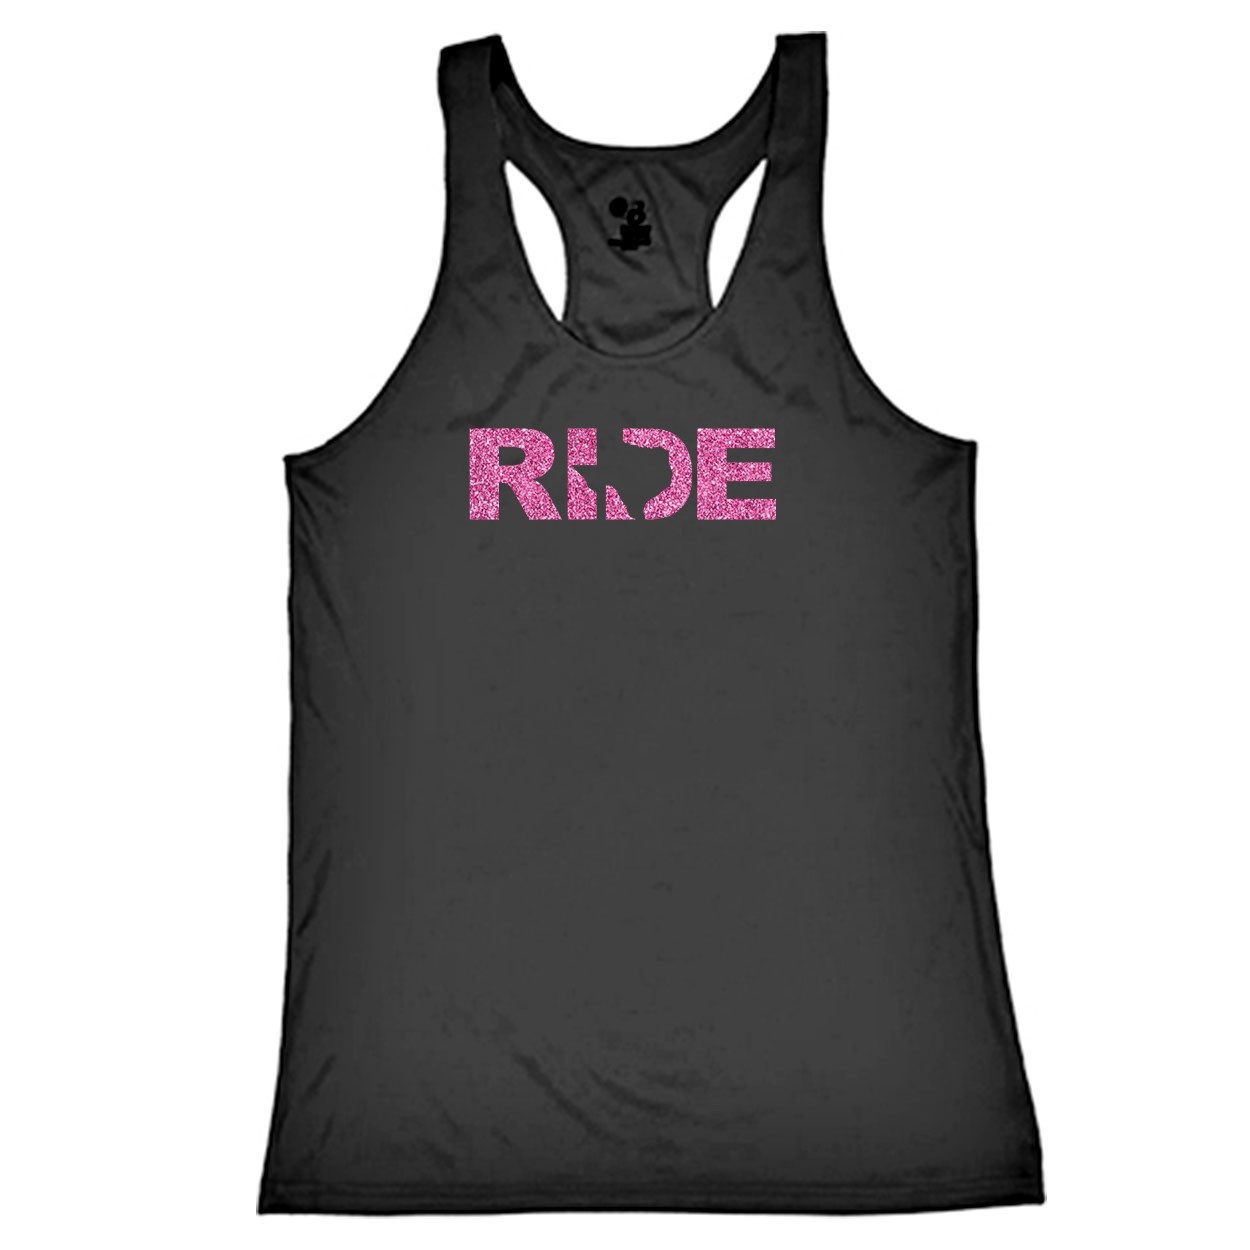 Ride Texas Classic Youth Girls Performance Racerback Tank Top Black (Glitter Pink Logo)